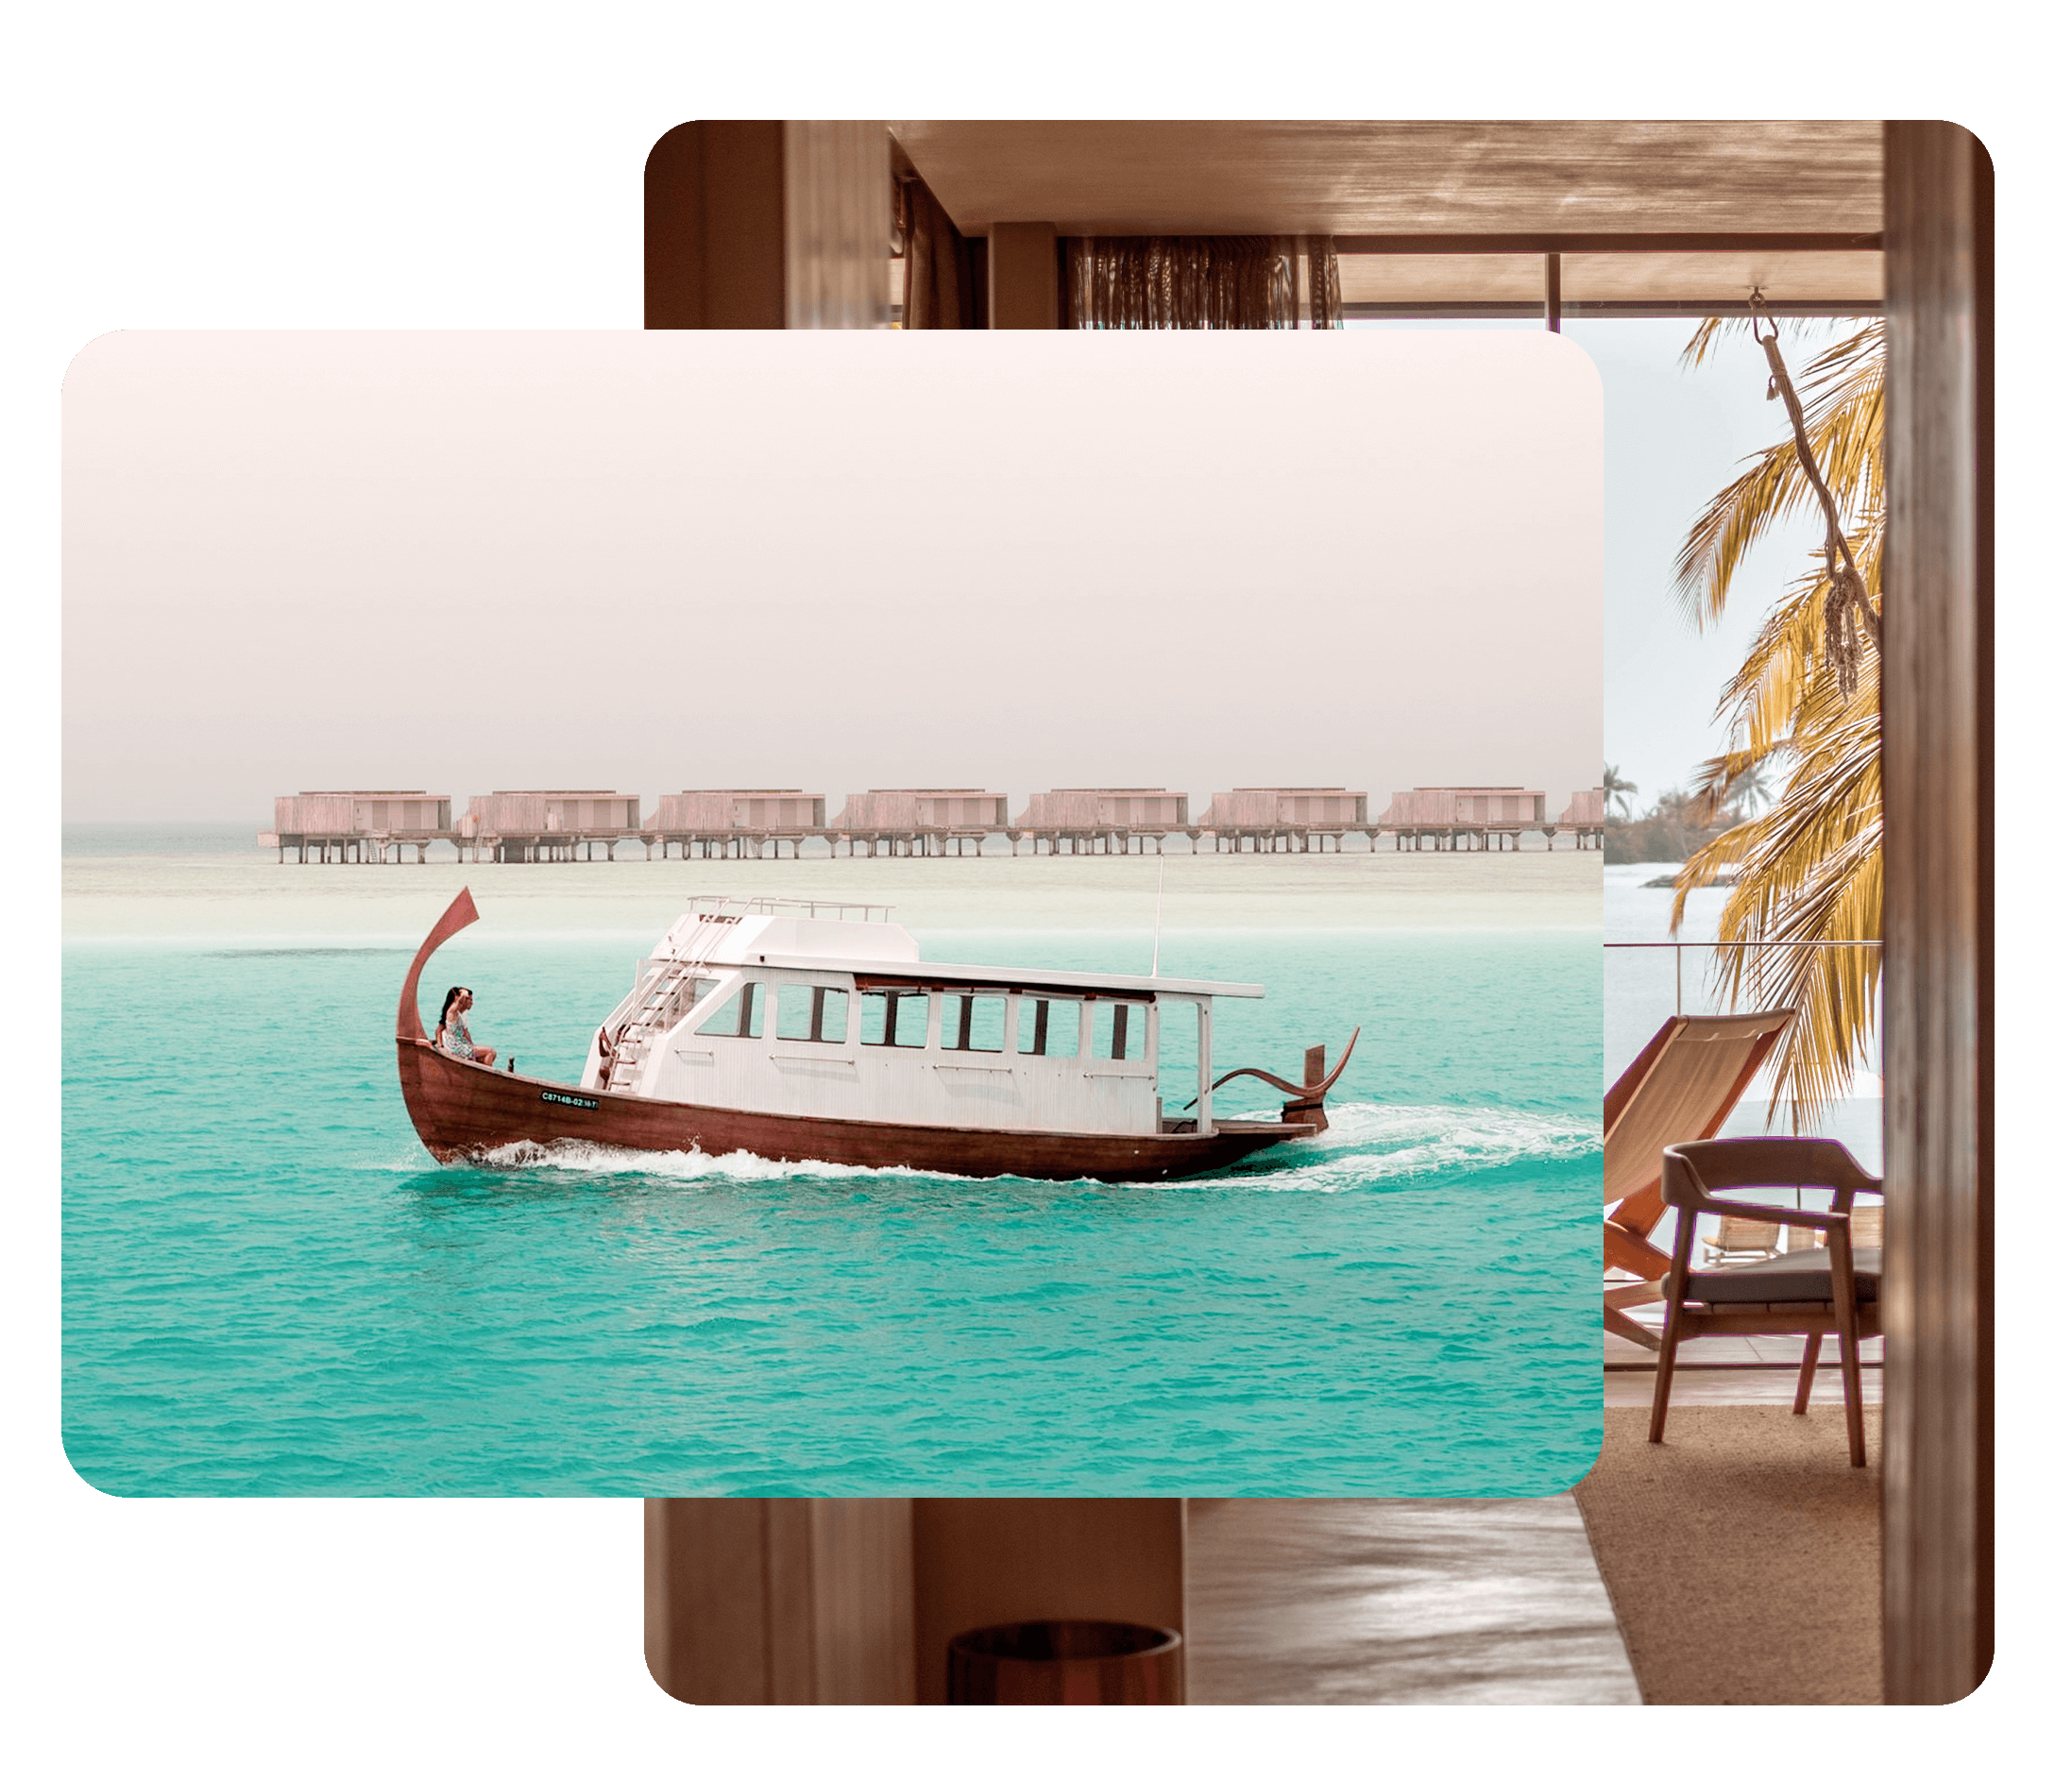 maldives luxury travel